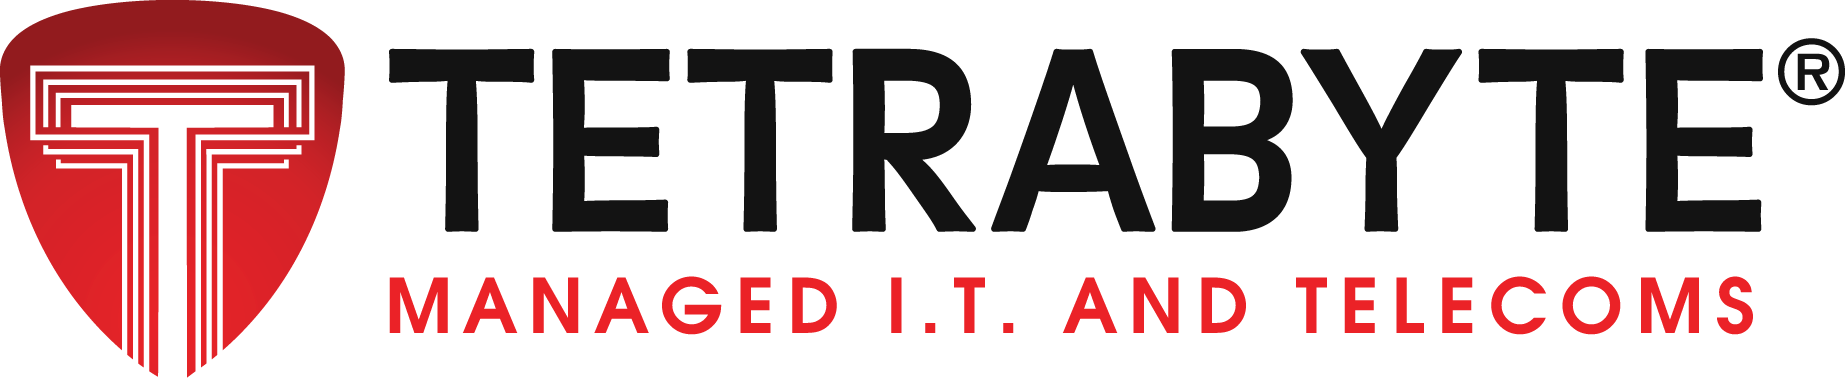 Tetrabyte Coporate Logo